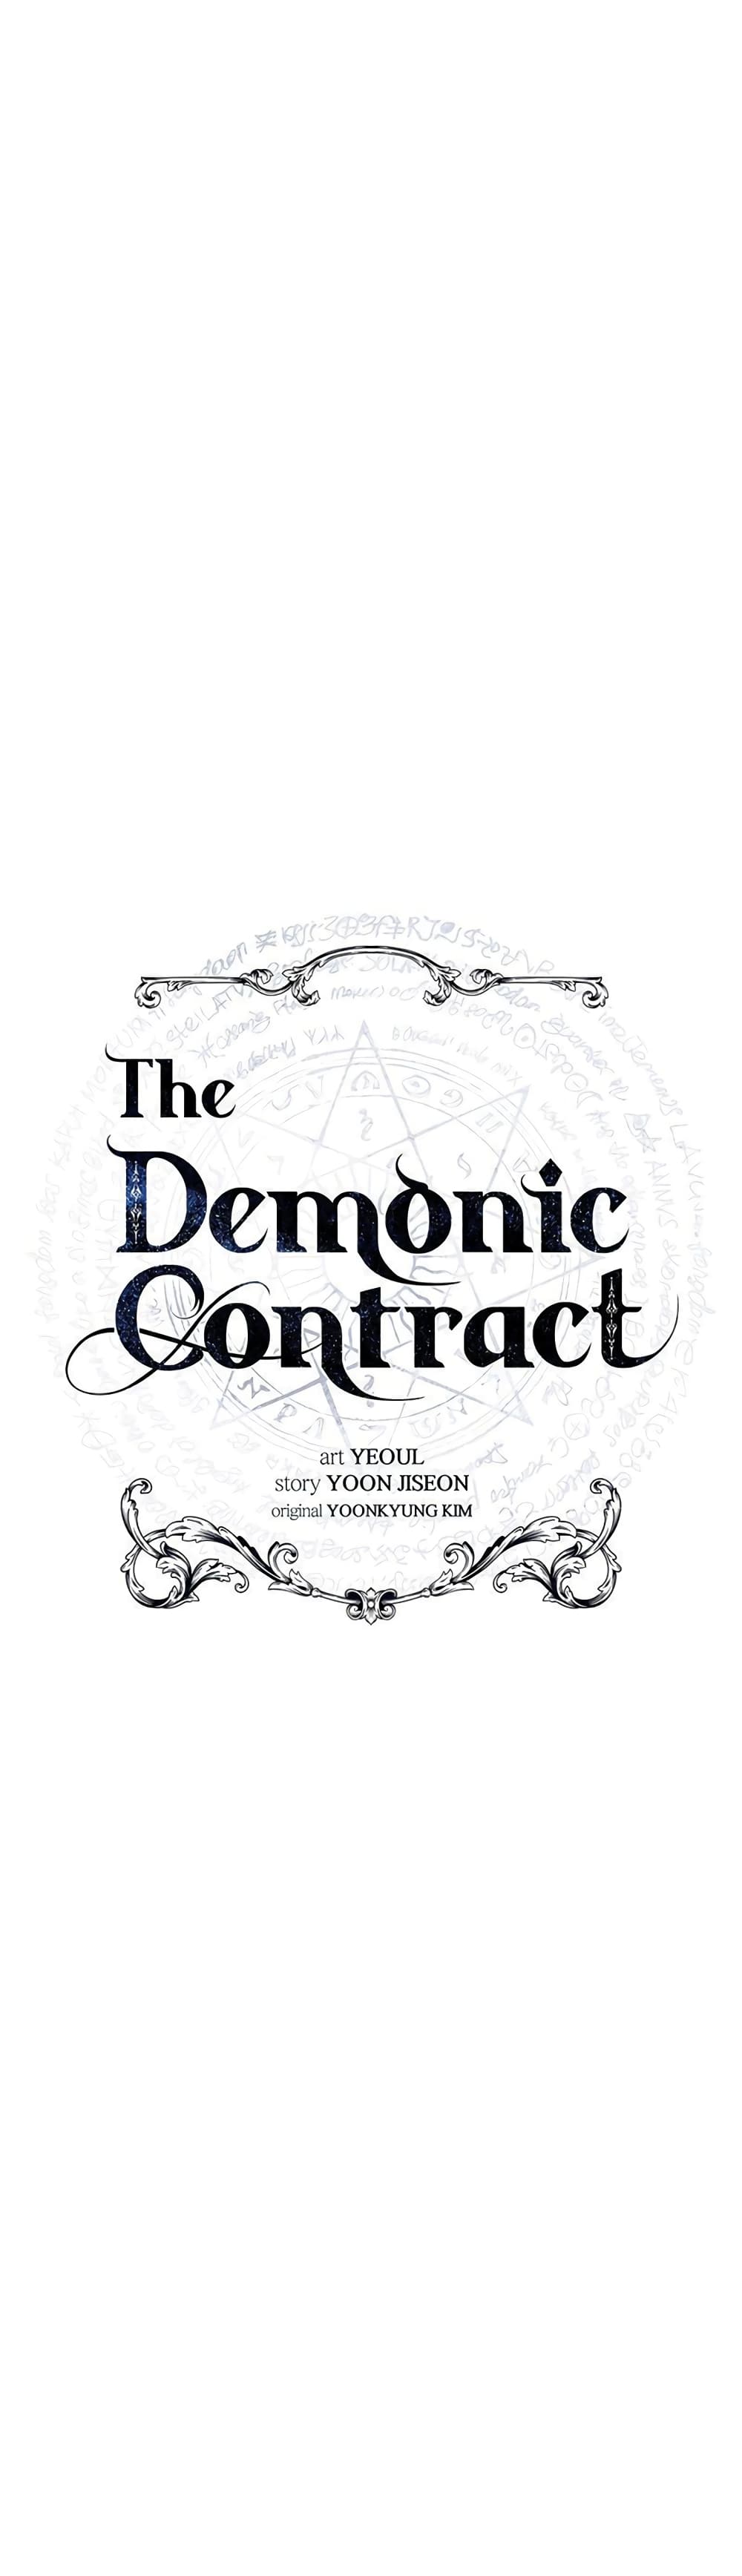 The Demonic Contract 40 03